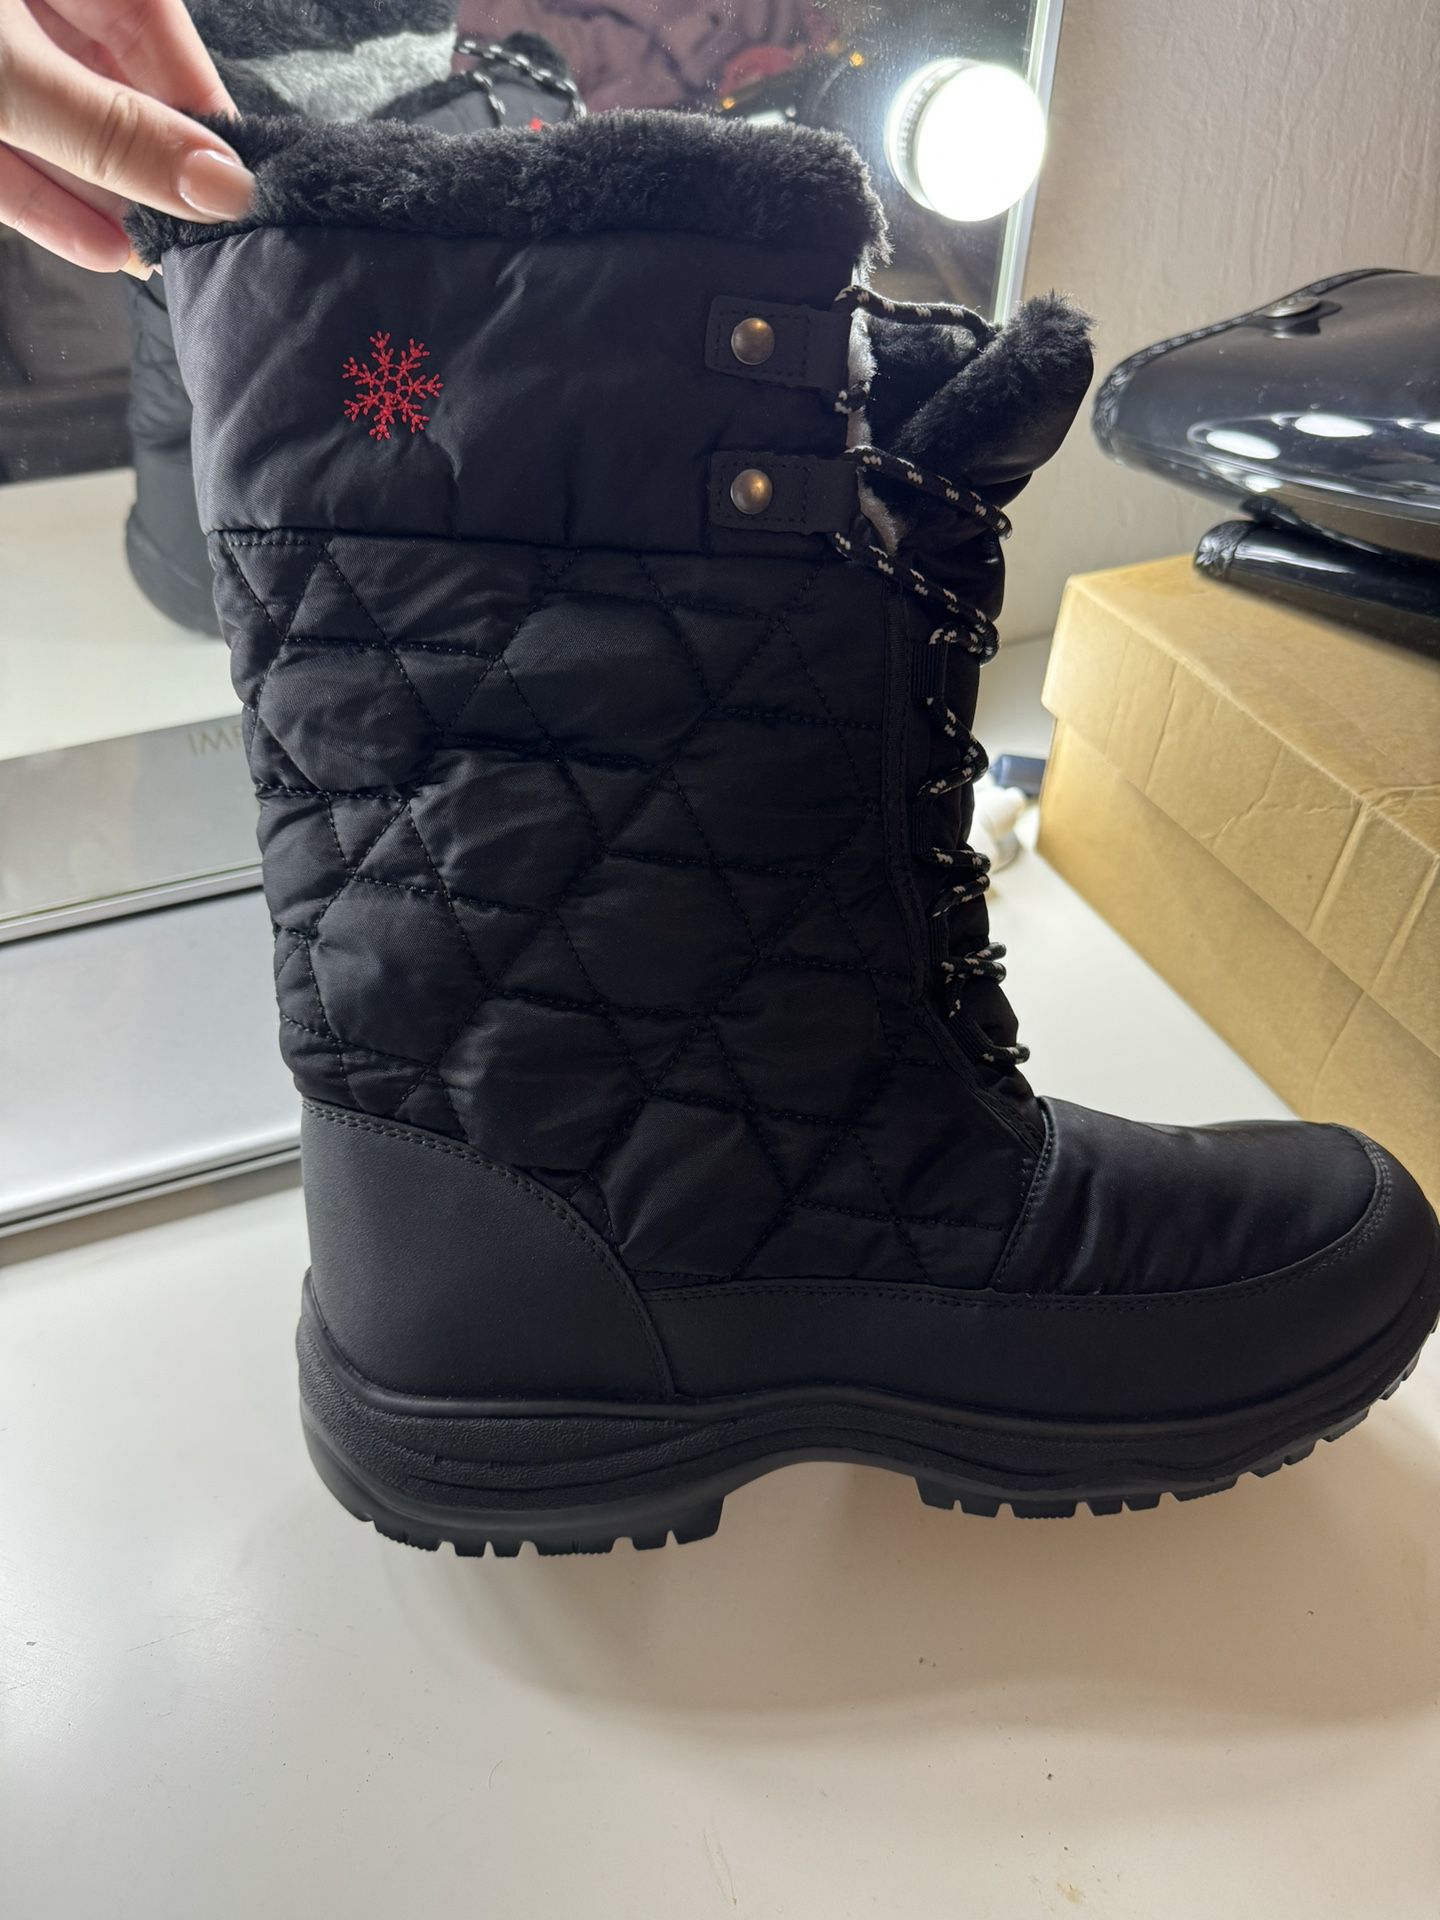 Women’s Snow Boots Size 12